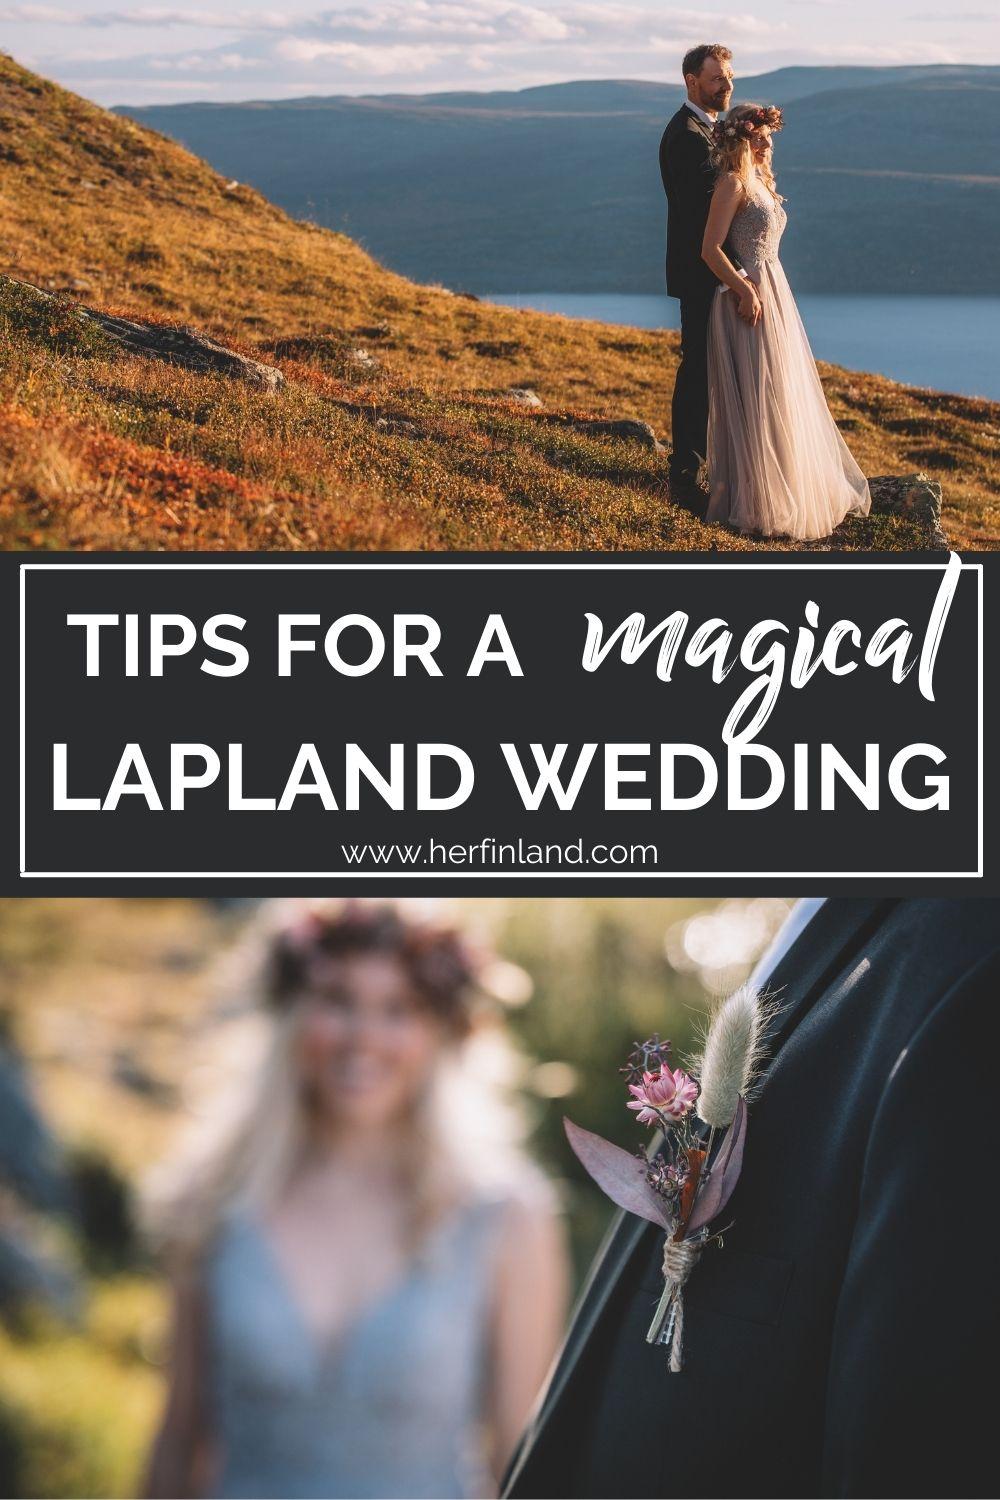 Lapland fall wedding in Finland